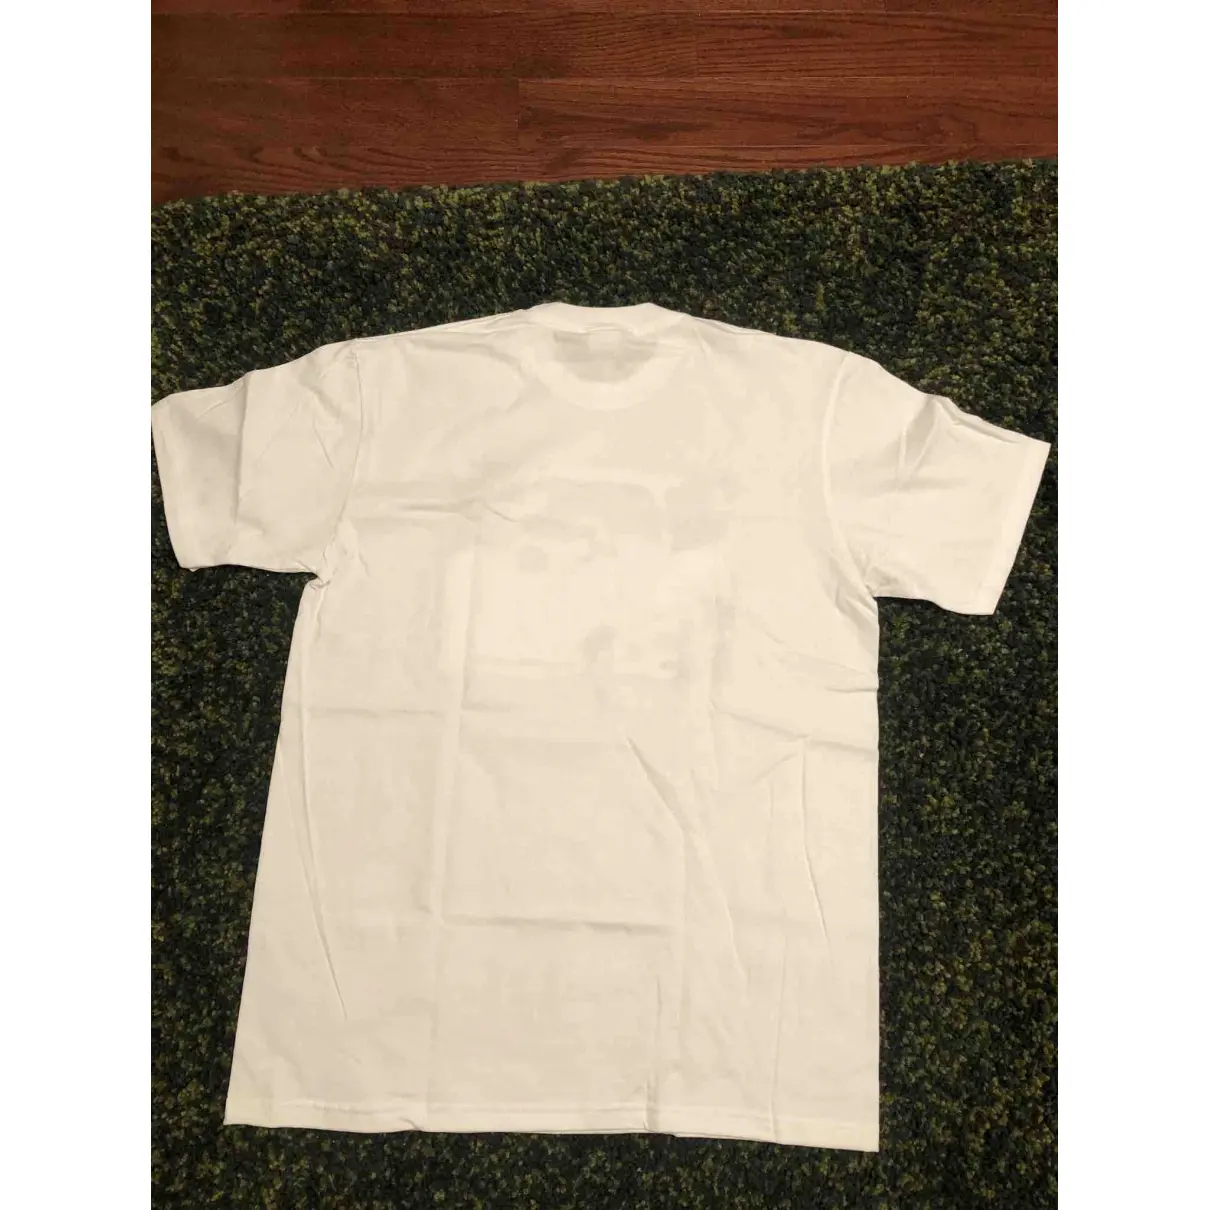 Buy Supreme White Cotton T-shirt online